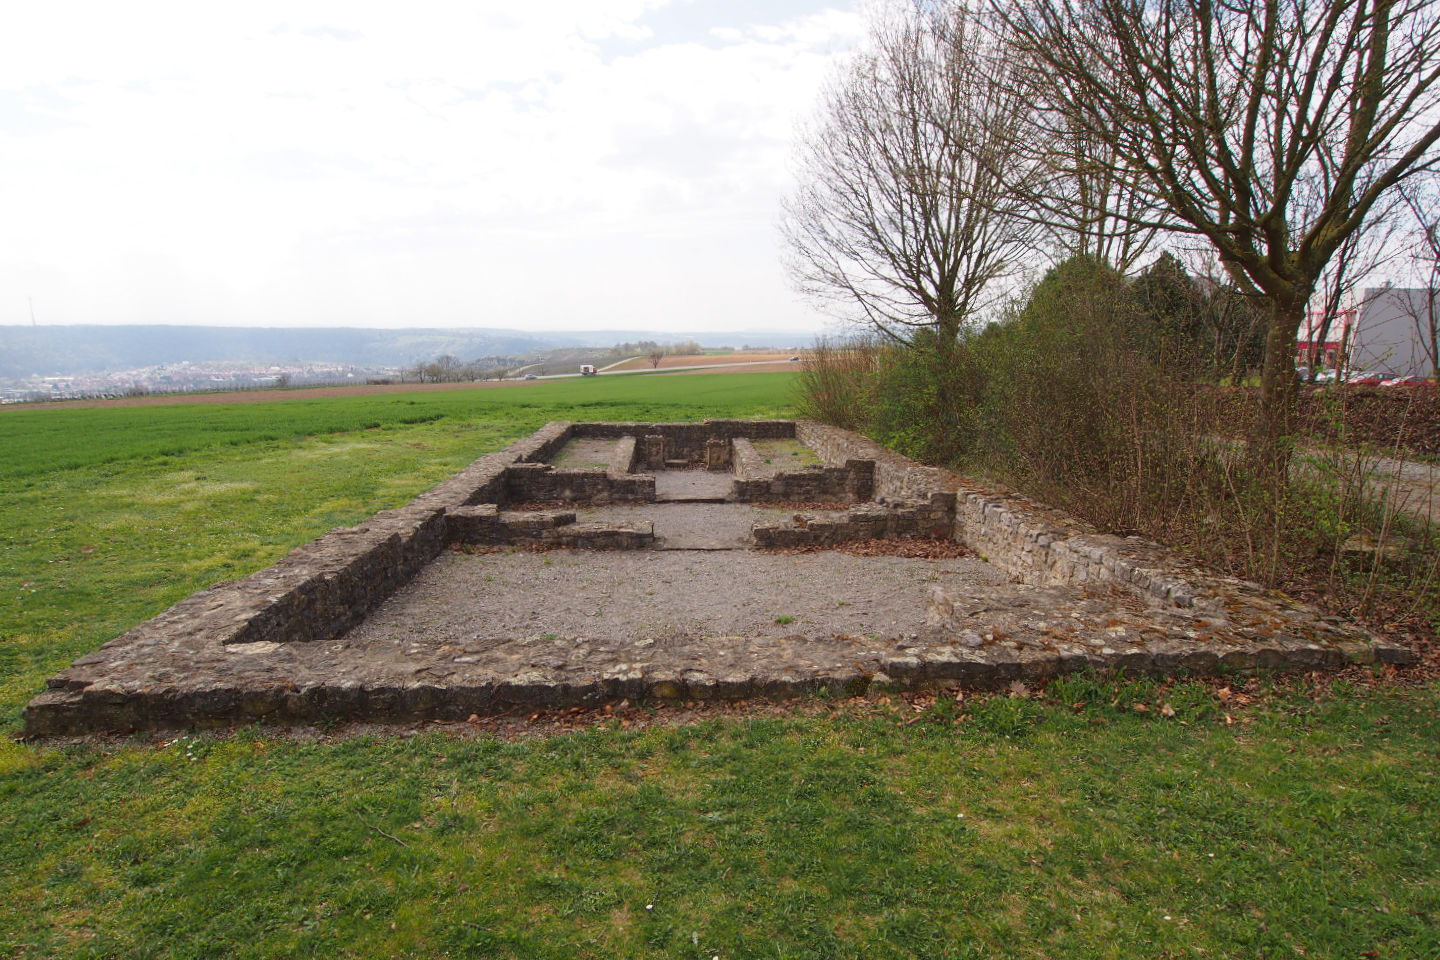 Mithraeum of Mundelsheim general view